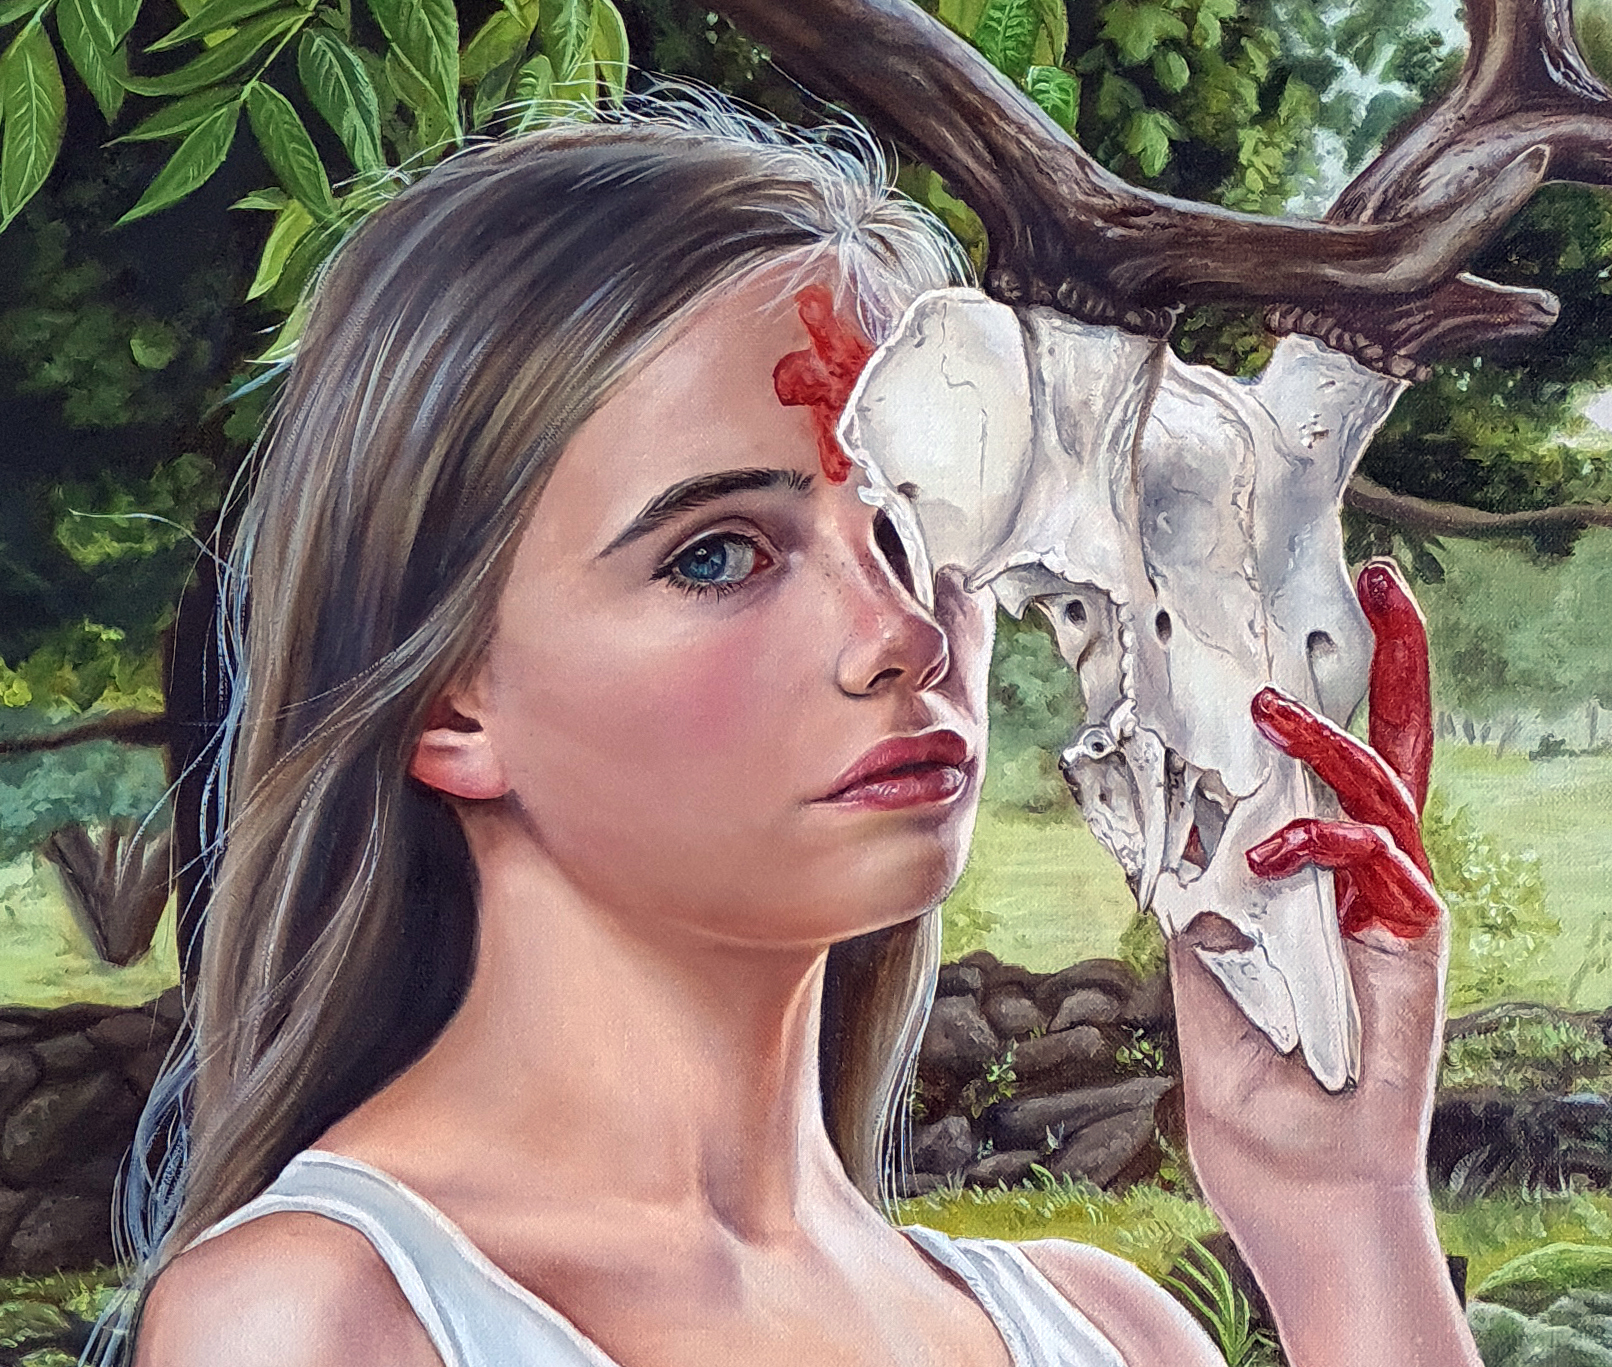 keepers of nothing detail portrait cross on forehead deer skull magical realism christina ridgeway art 